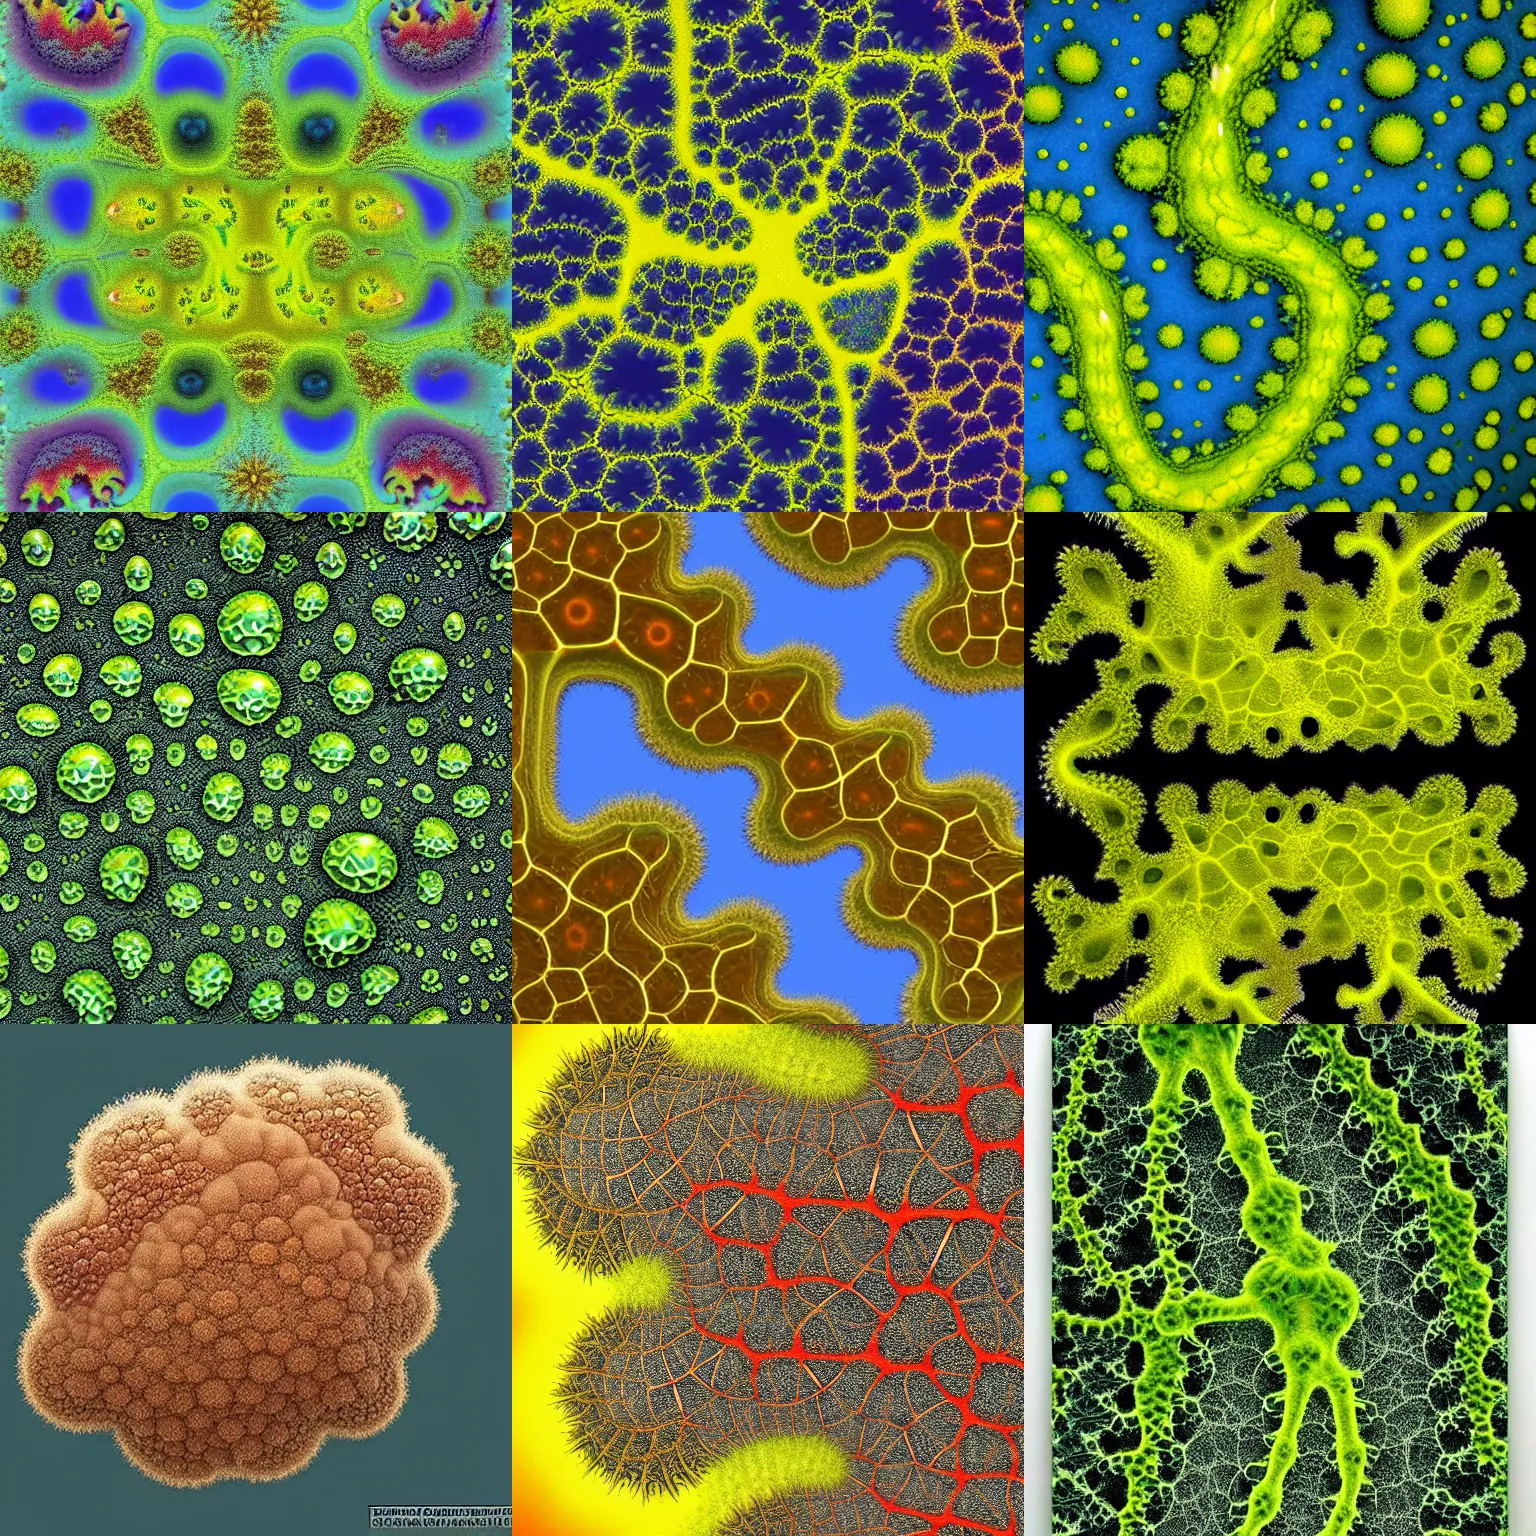 Prompt: slime mold fractal, very detailed, mandelbrot